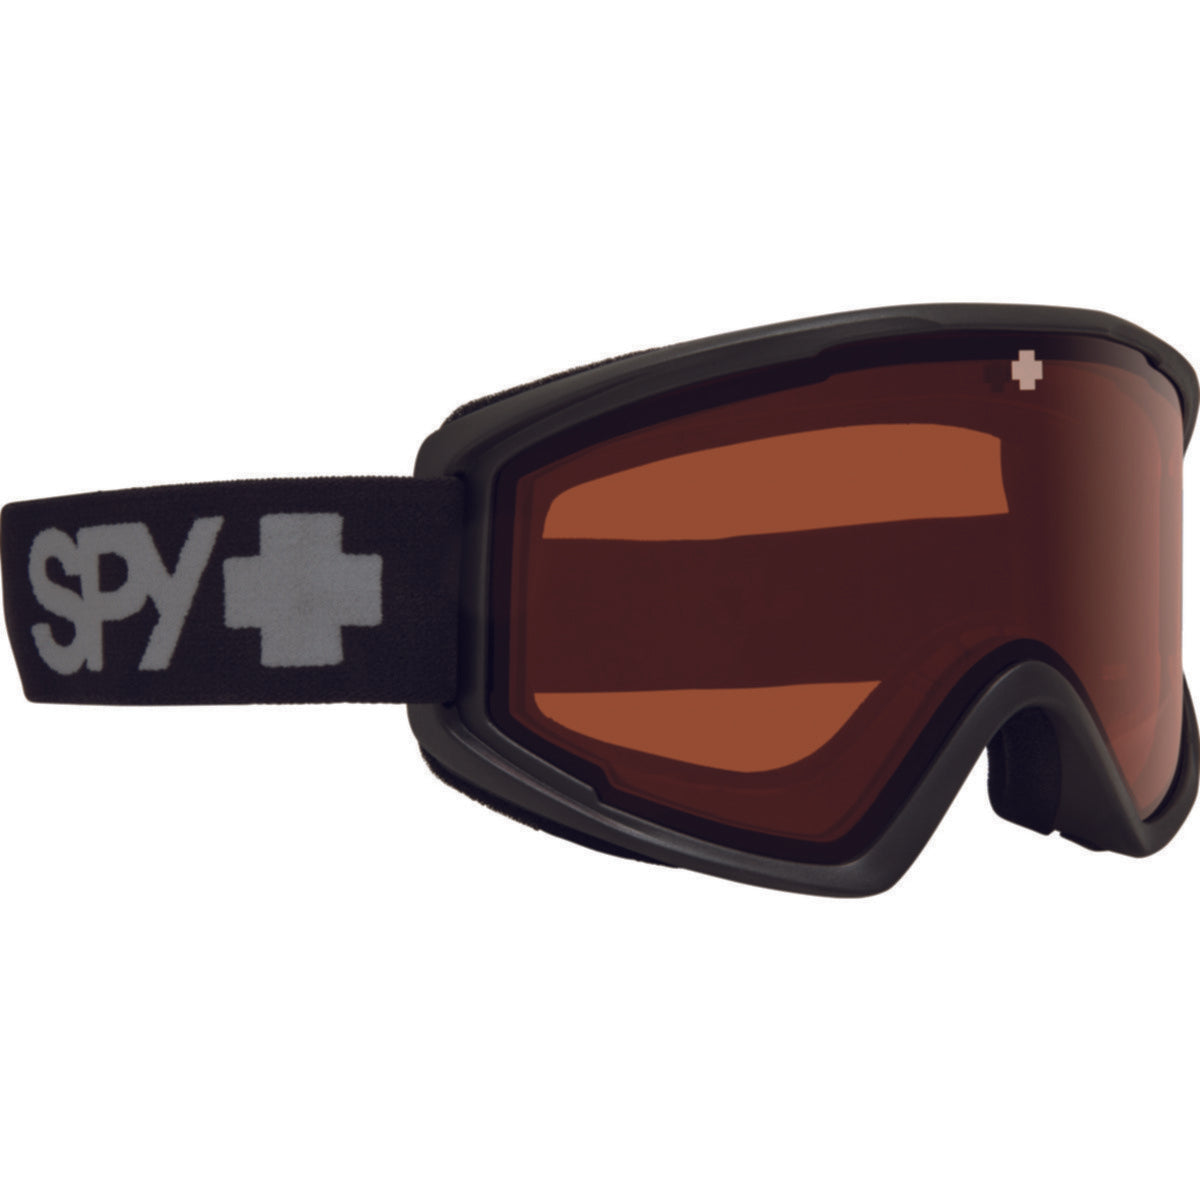 Spy Crusher Elite Goggles  Black Matte Medium-Large M-L 54-61